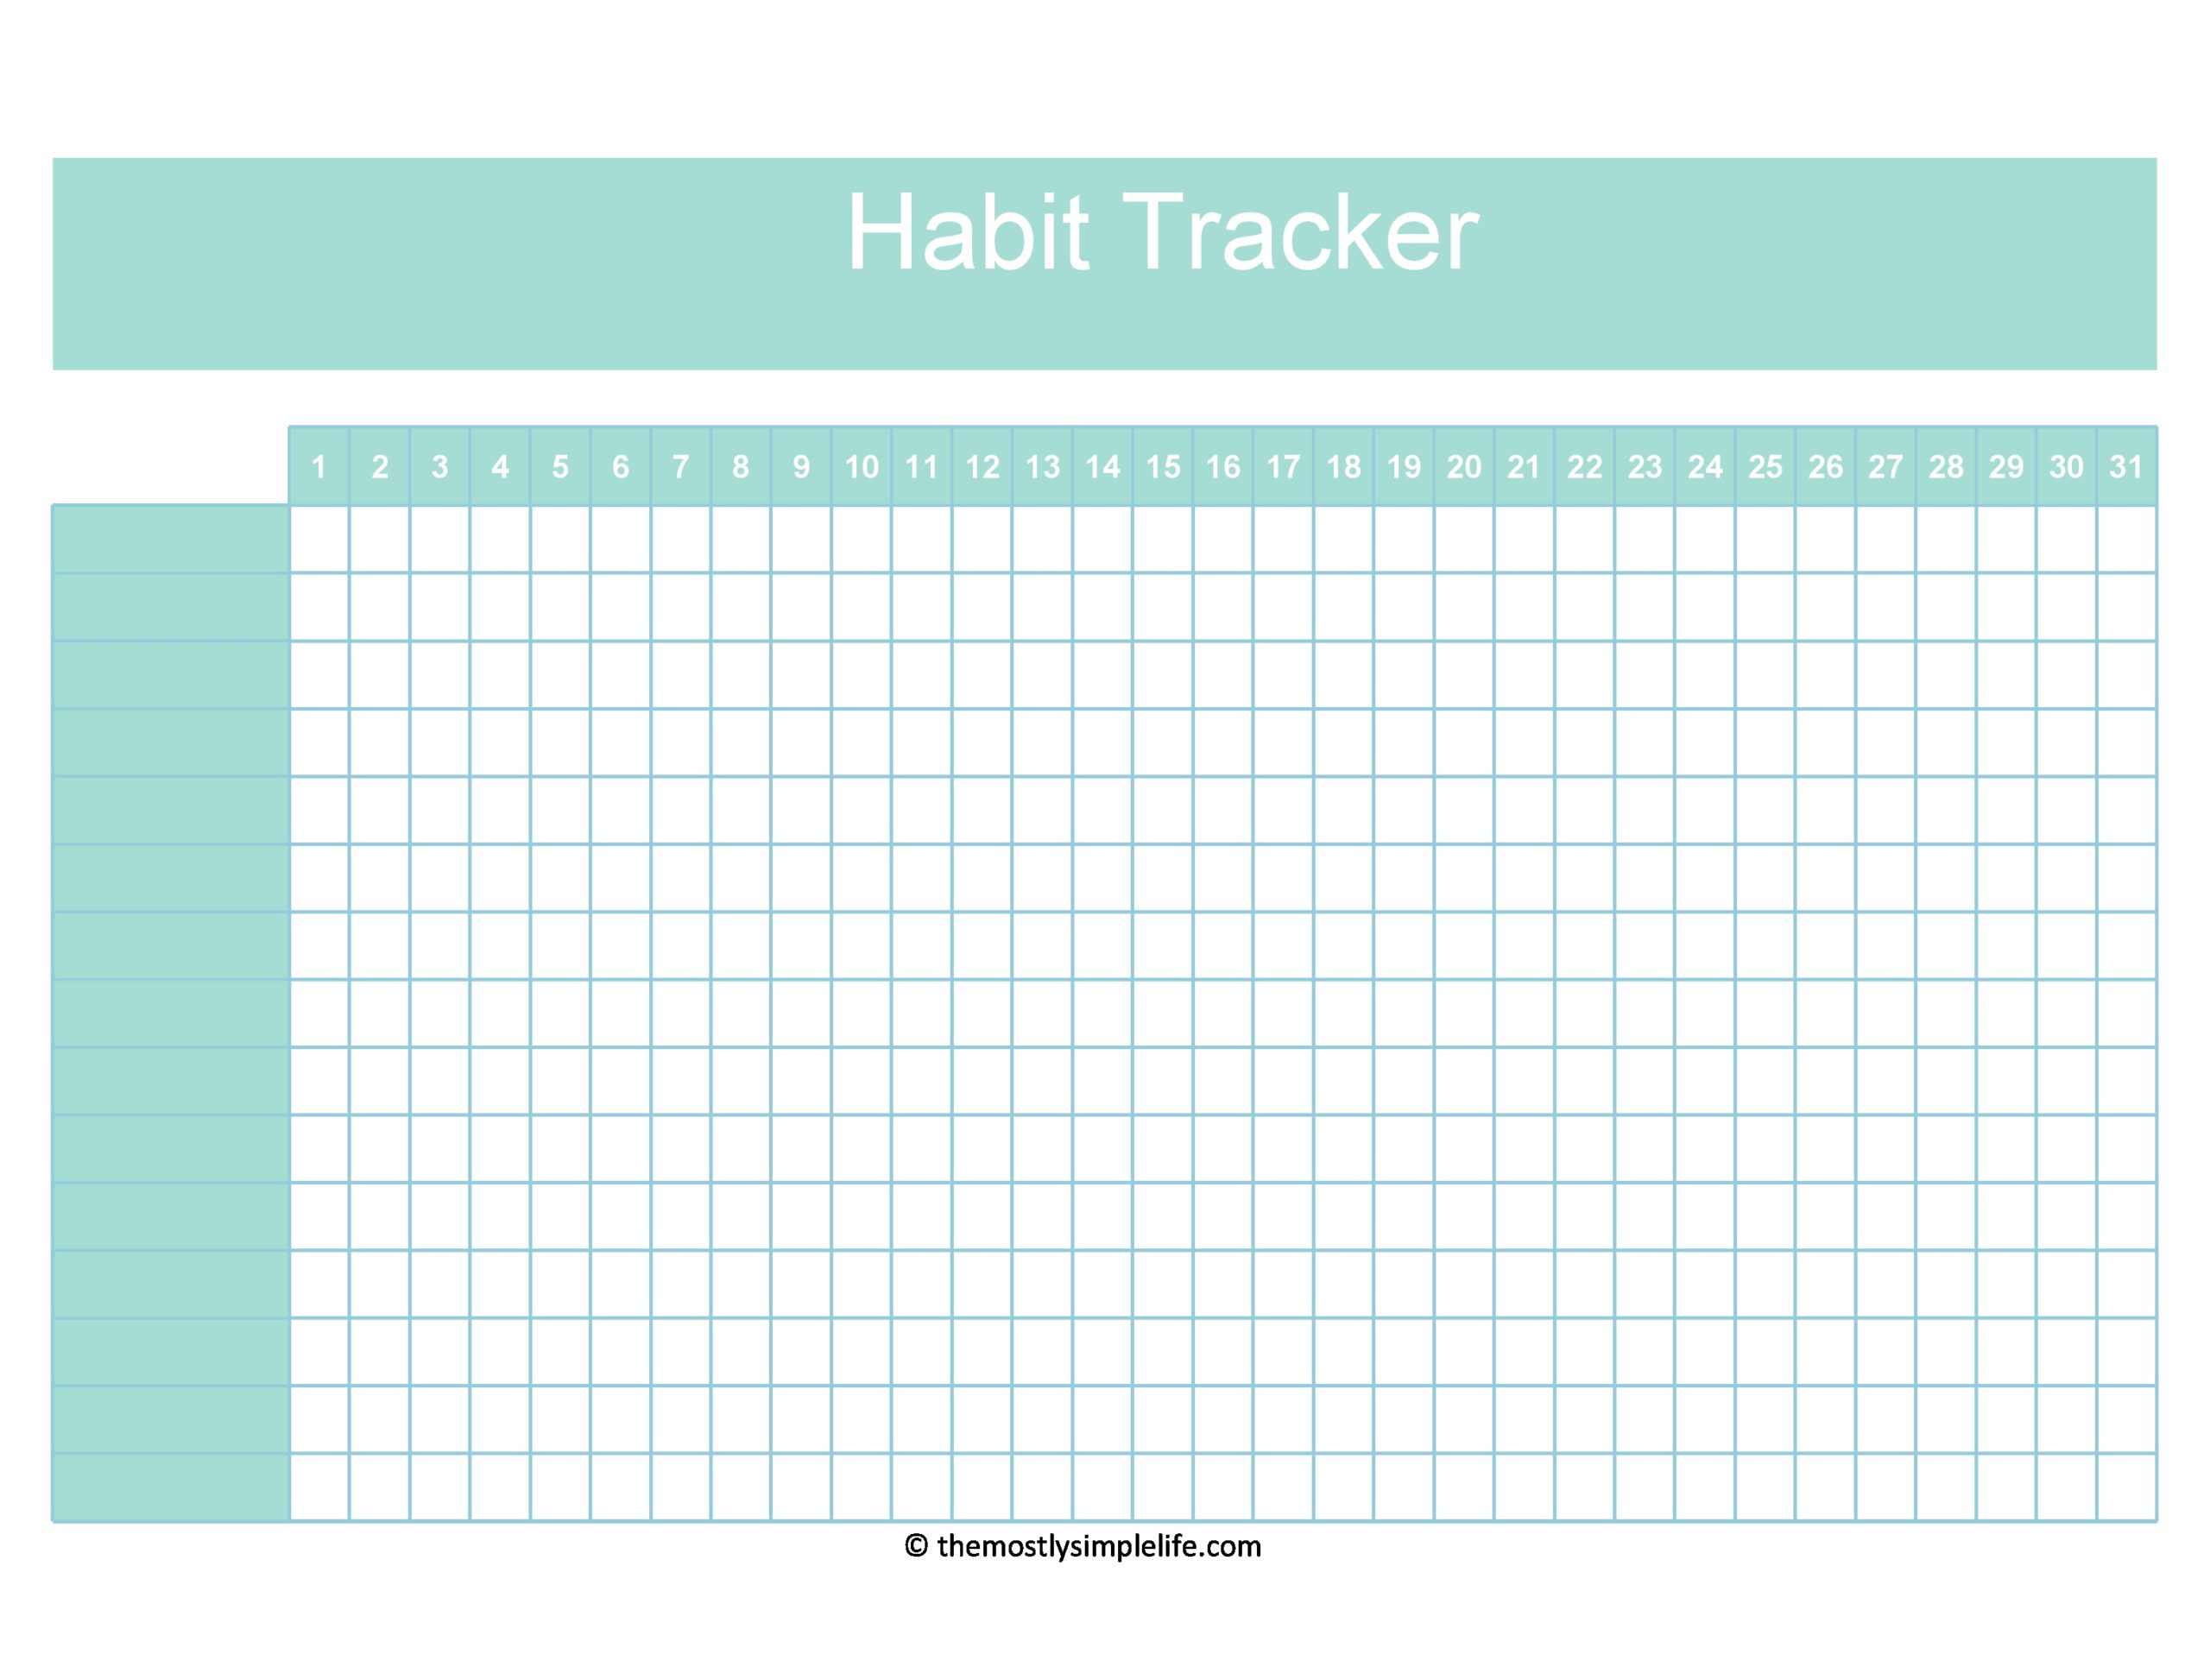 Free habit tracker template 05